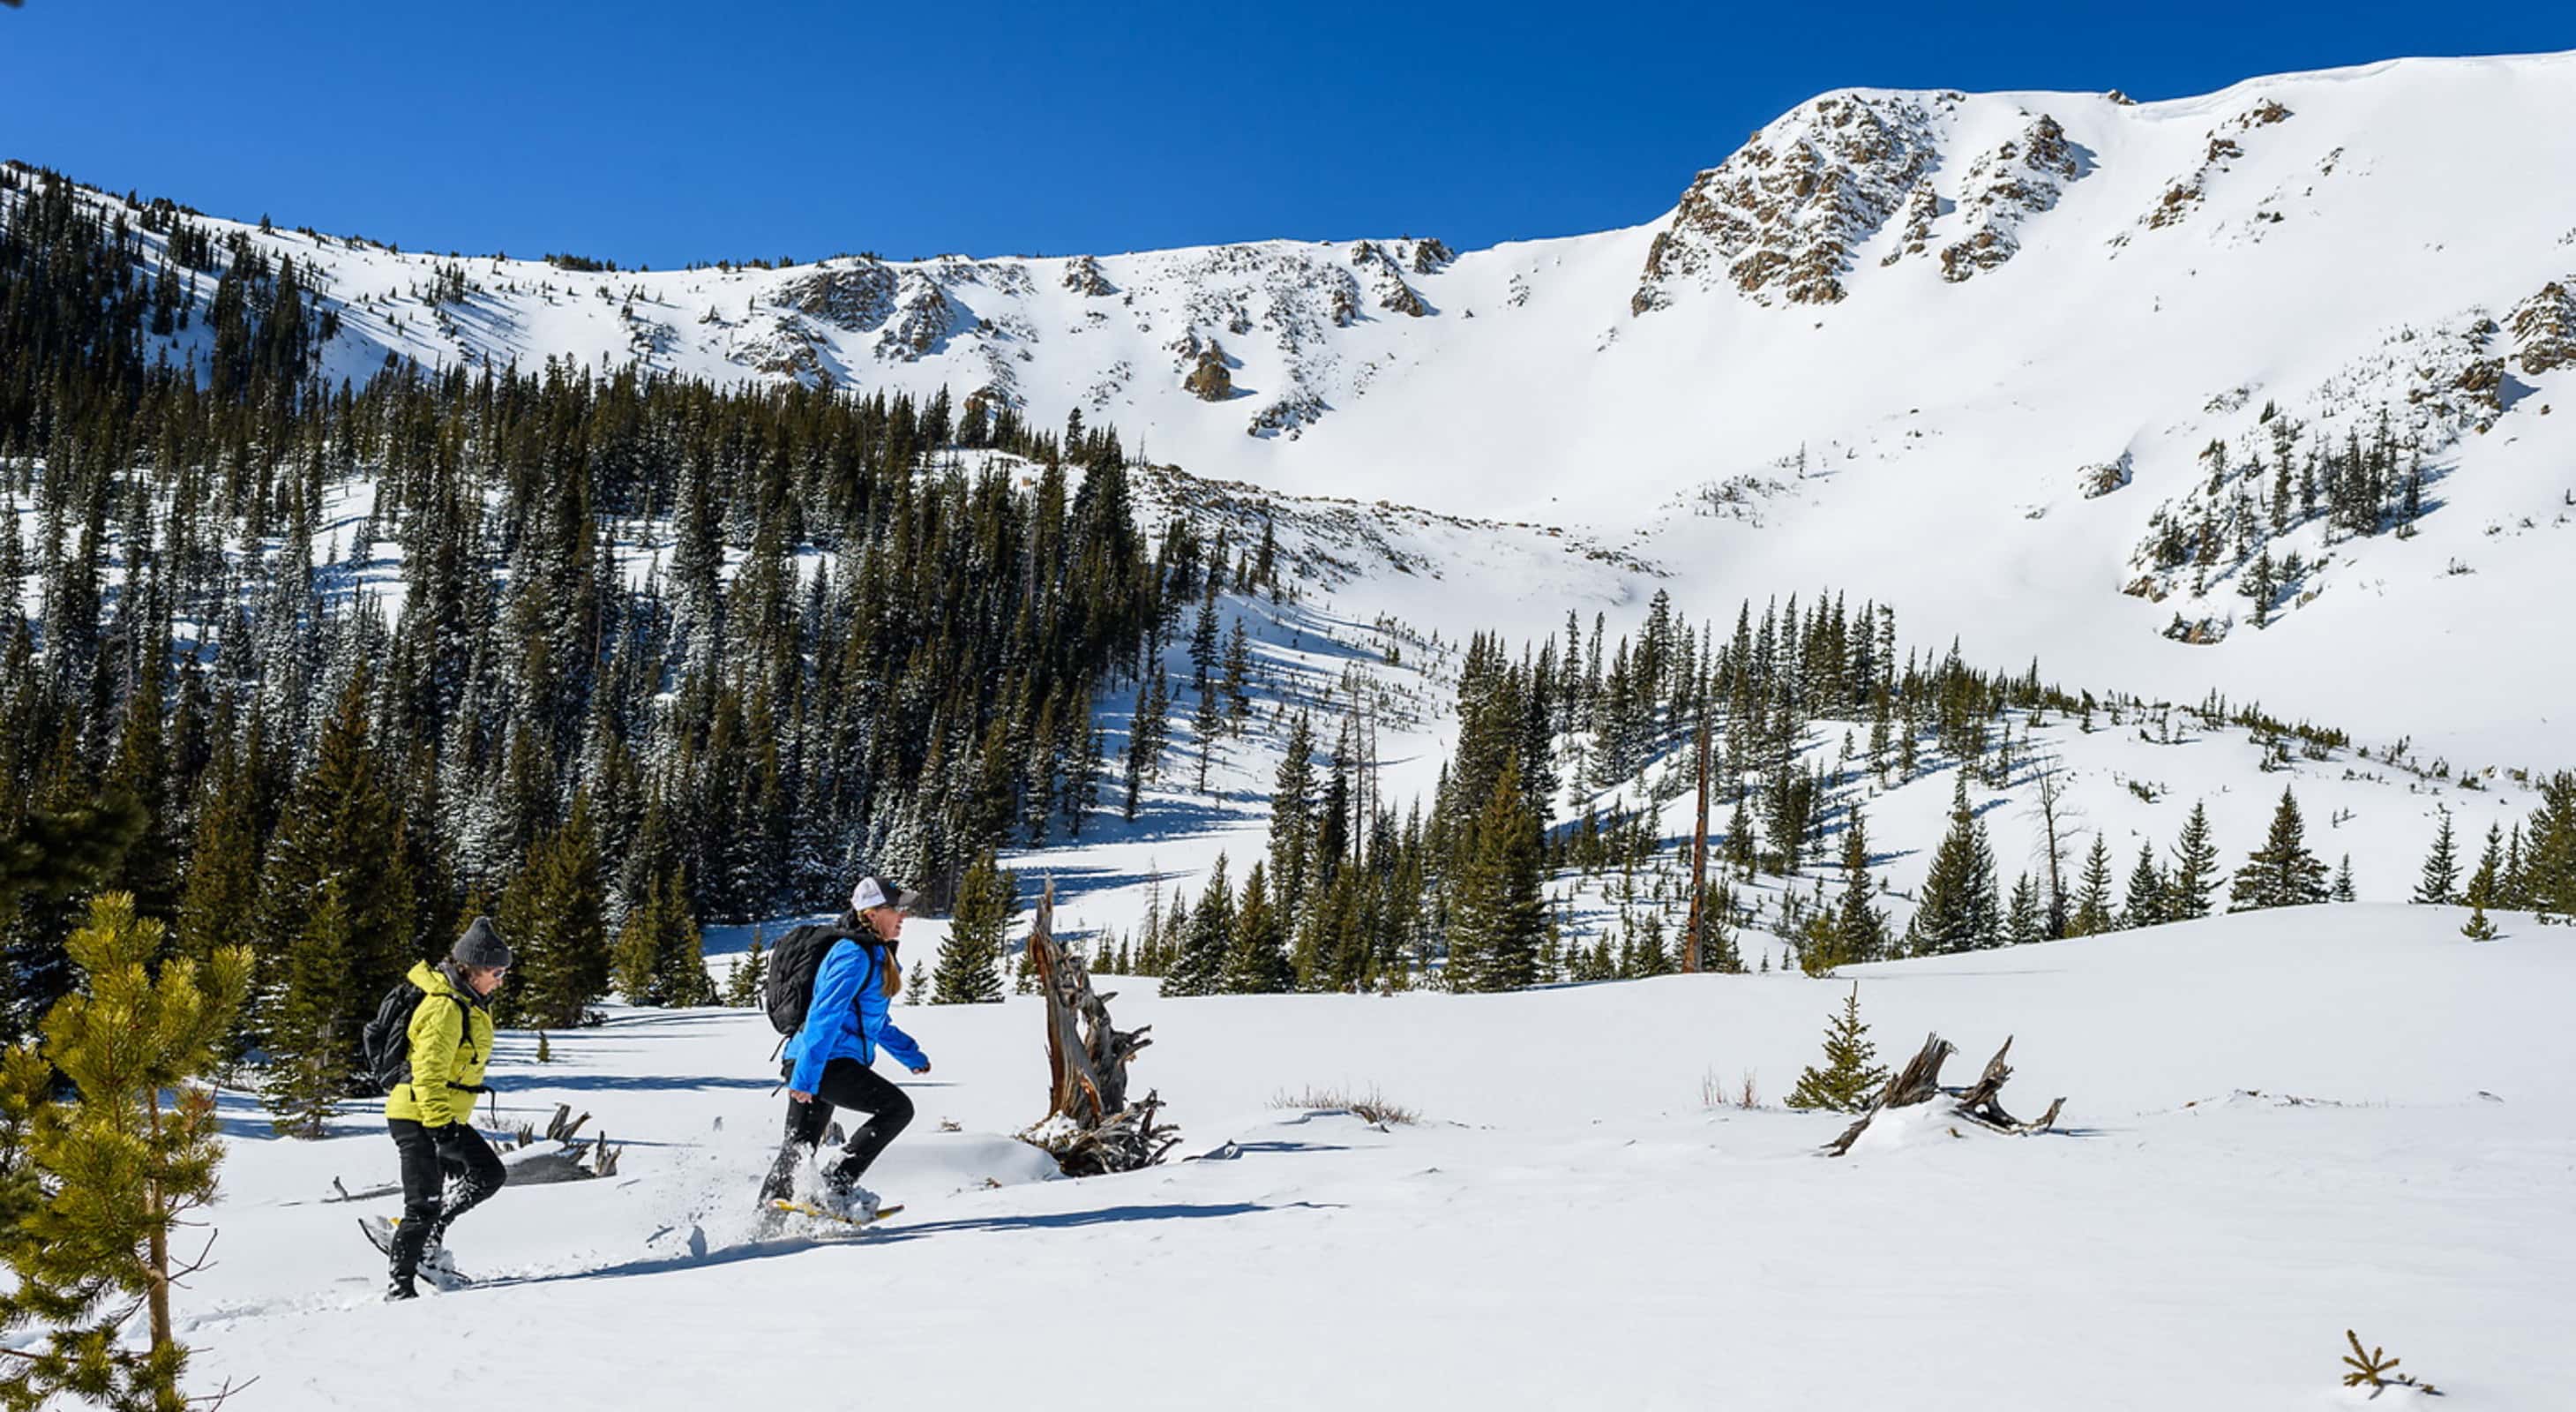 Snowshoeing through the Colorado mountains